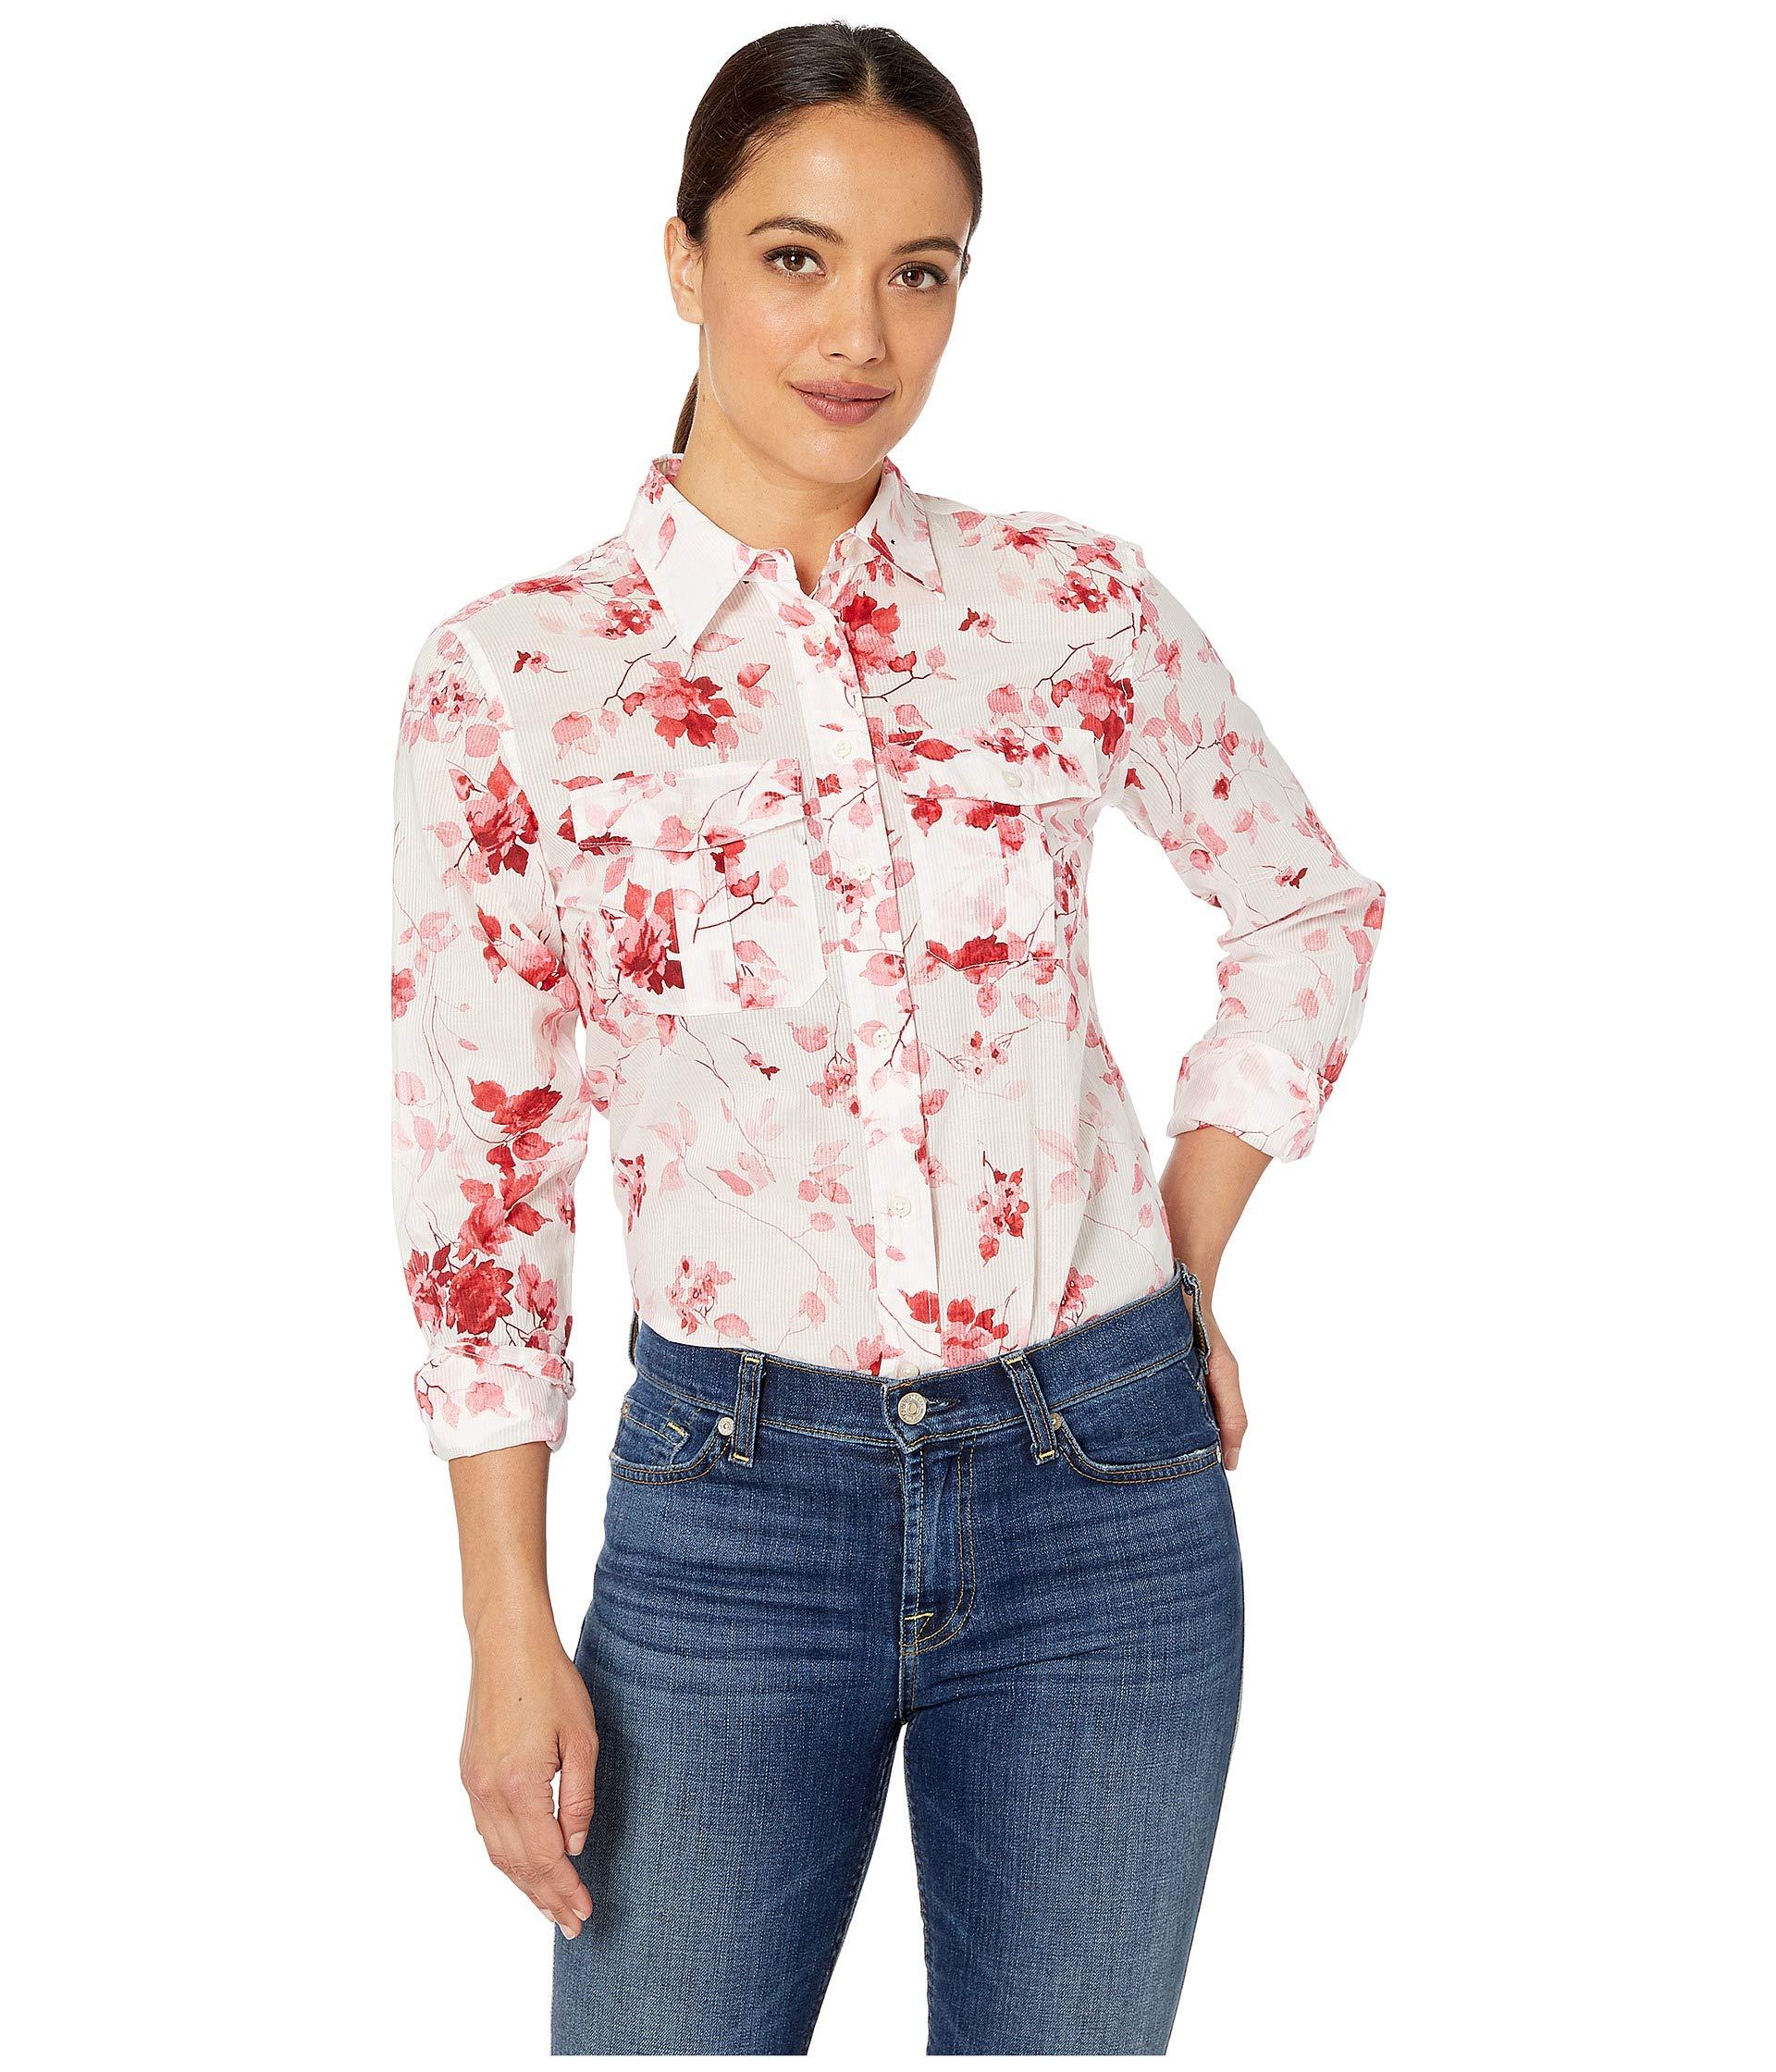 Lauren by Ralph Lauren Petite Floral Cotton Shirt in Red - Lyst